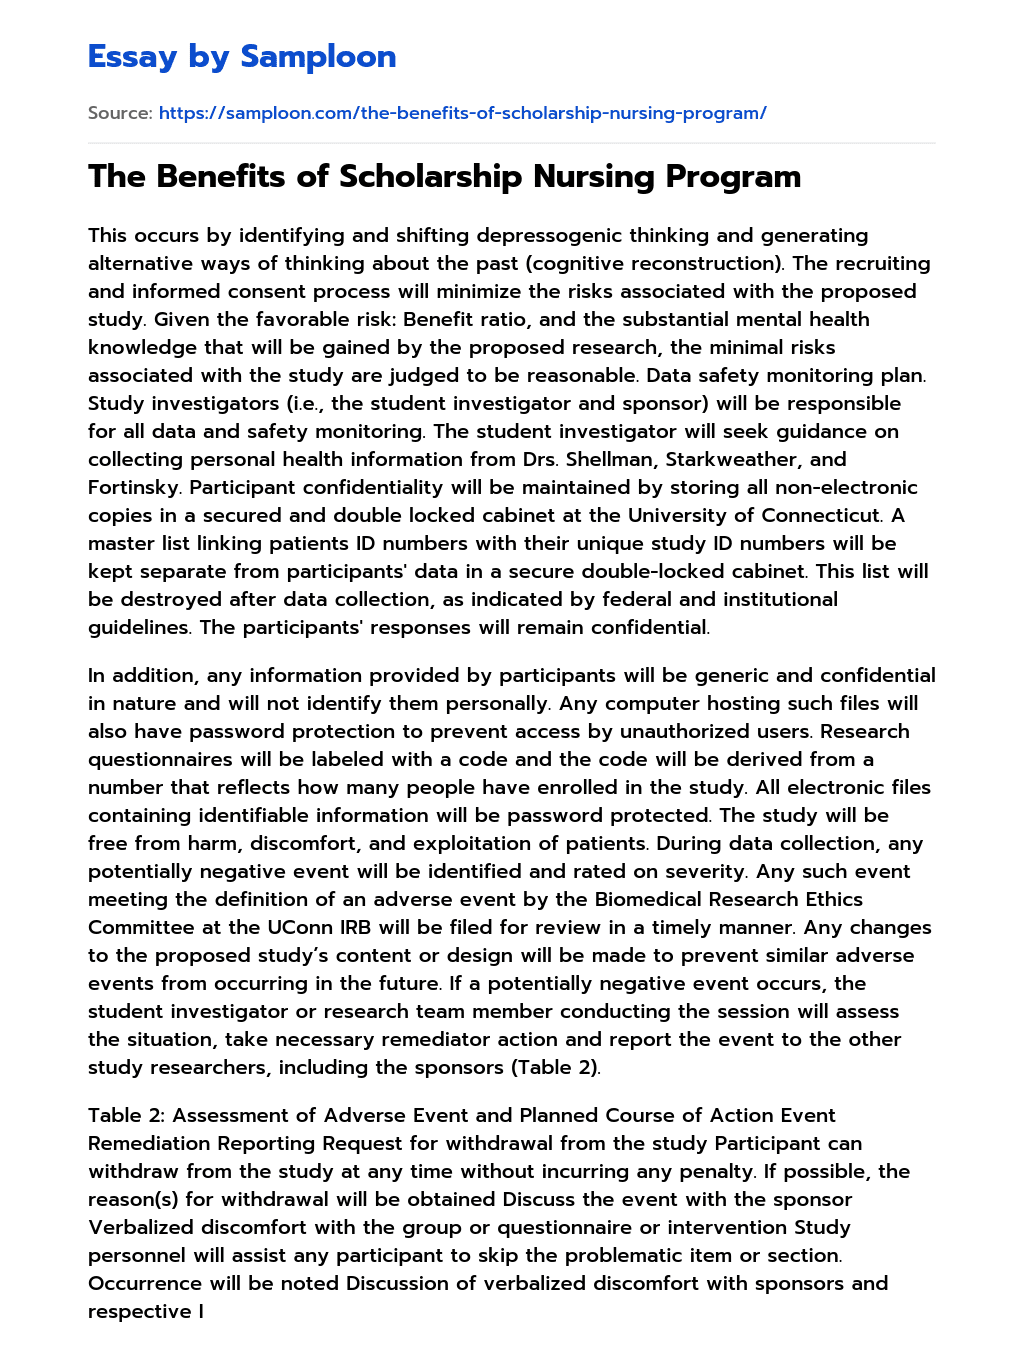 The Benefits of Scholarship Nursing Program essay